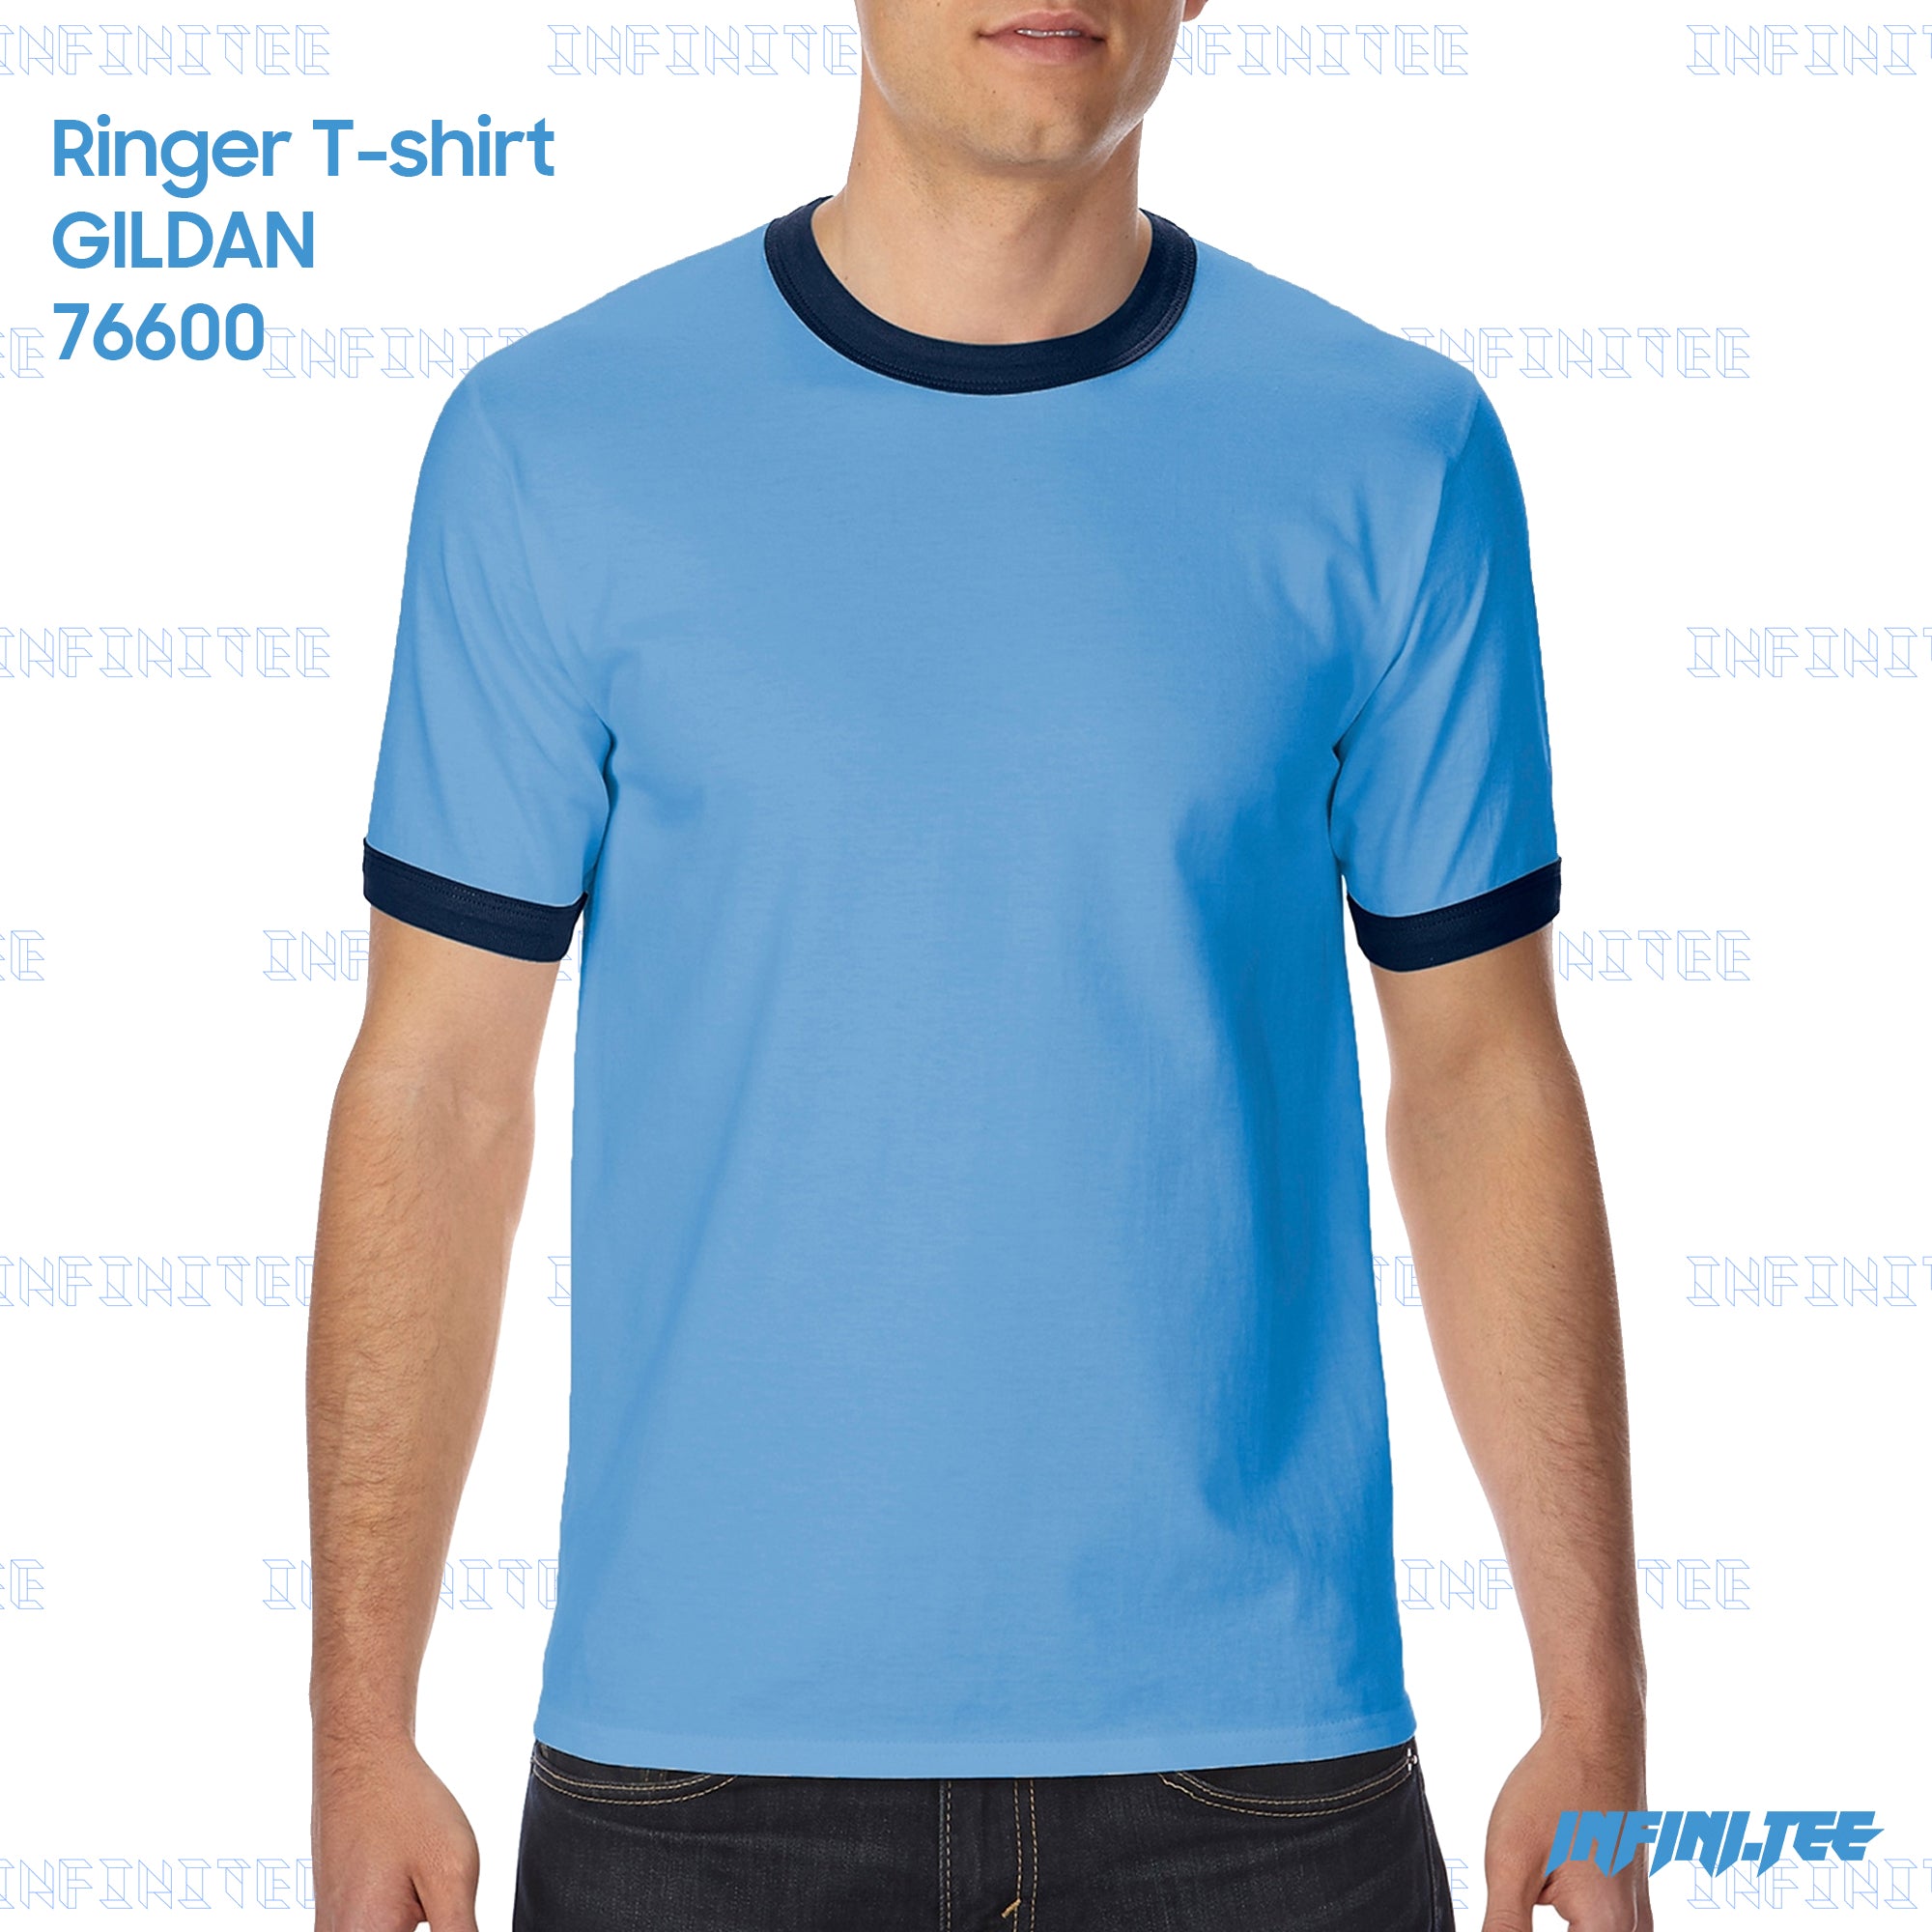 RINGER T-shirt 76600 GILDAN - CAROLINA BLUE